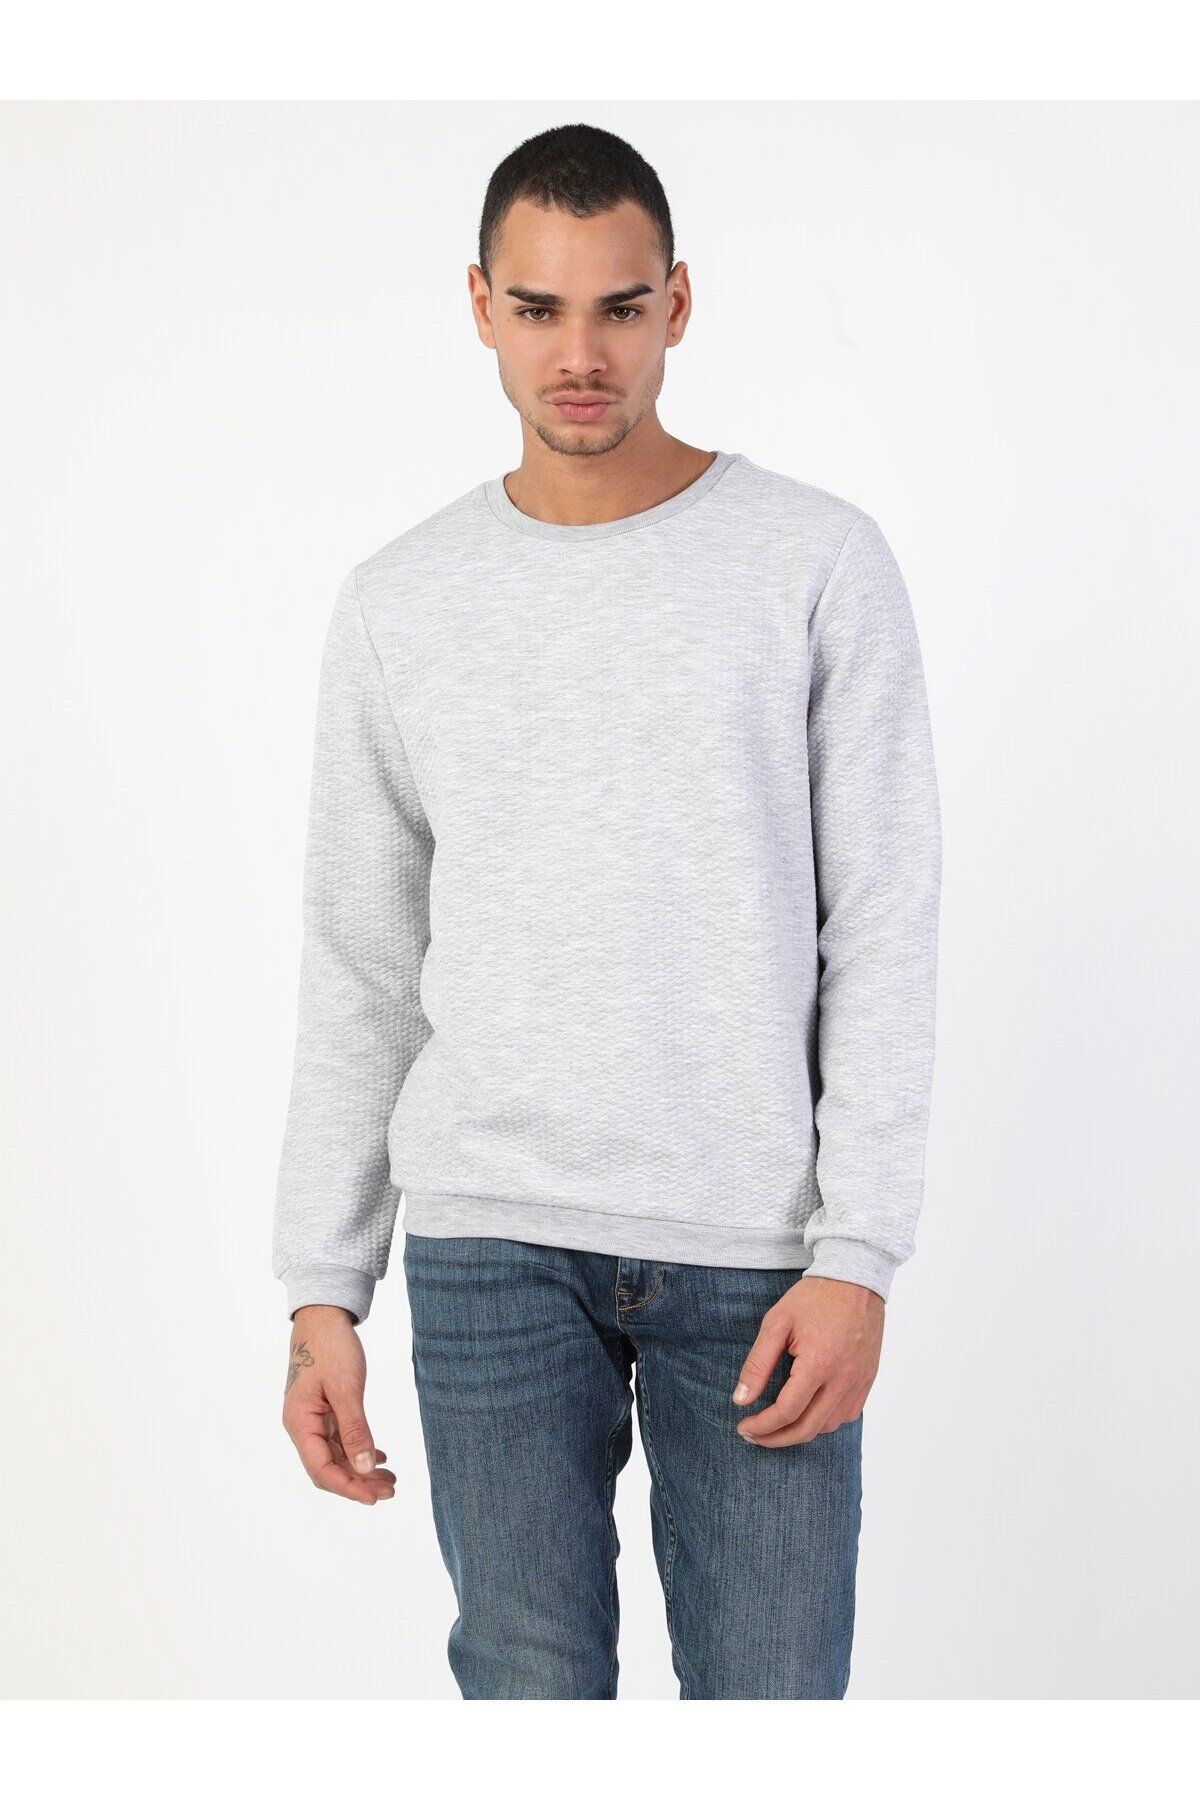 Colin’s مردان مناسب و خاکستری melanj sweatshirt